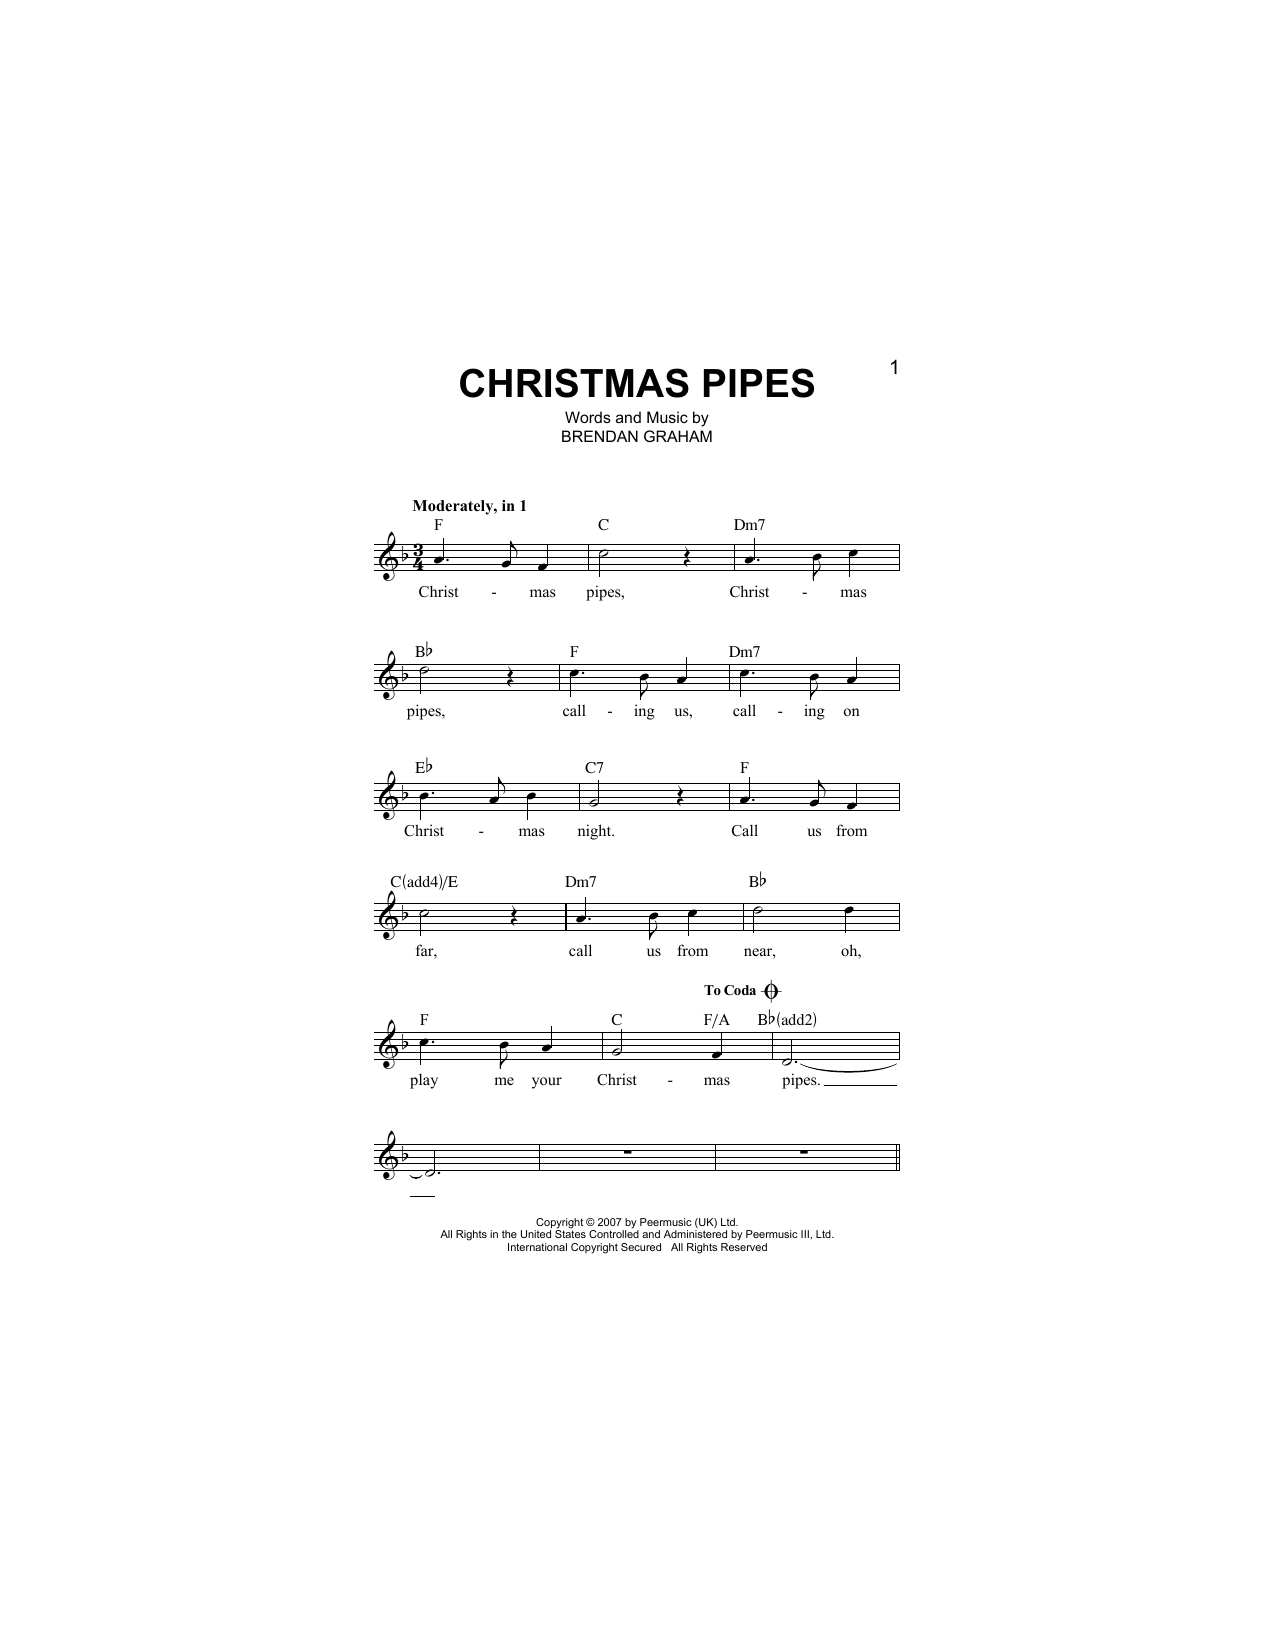 Brendan Graham Christmas Pipes Sheet Music Notes & Chords for Melody Line, Lyrics & Chords - Download or Print PDF